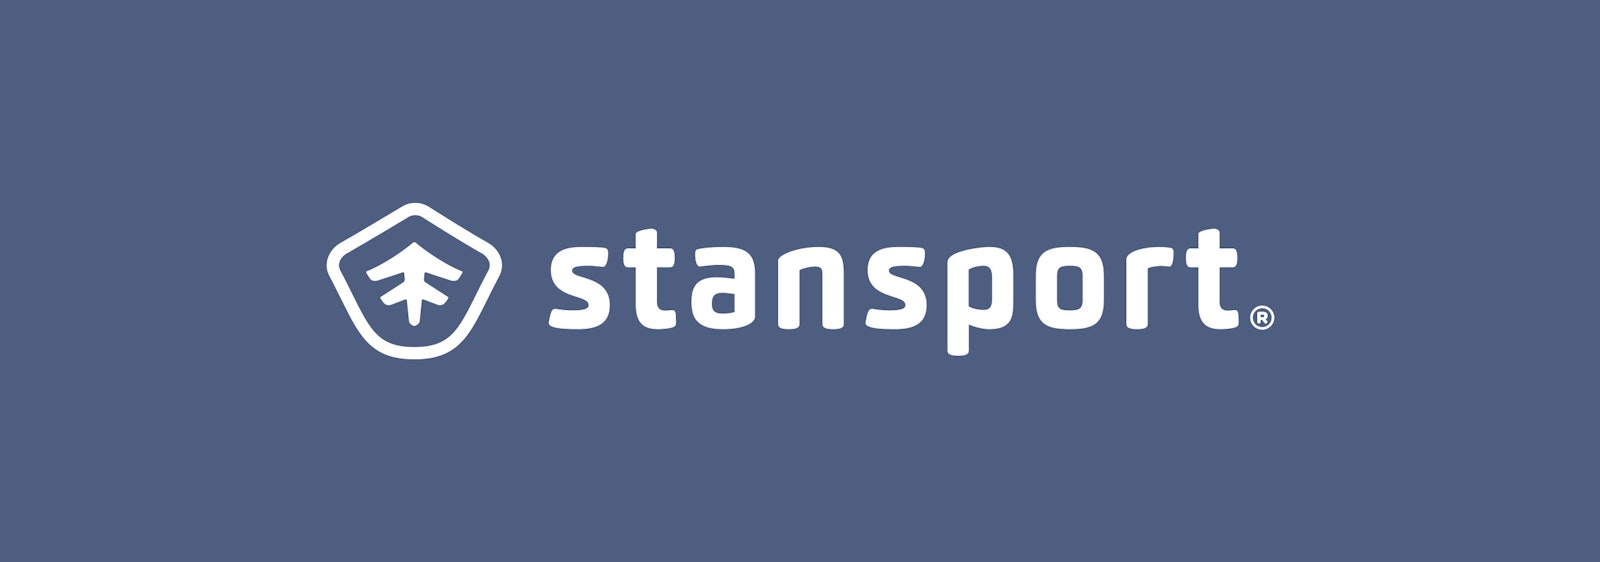 Stansport Logo B